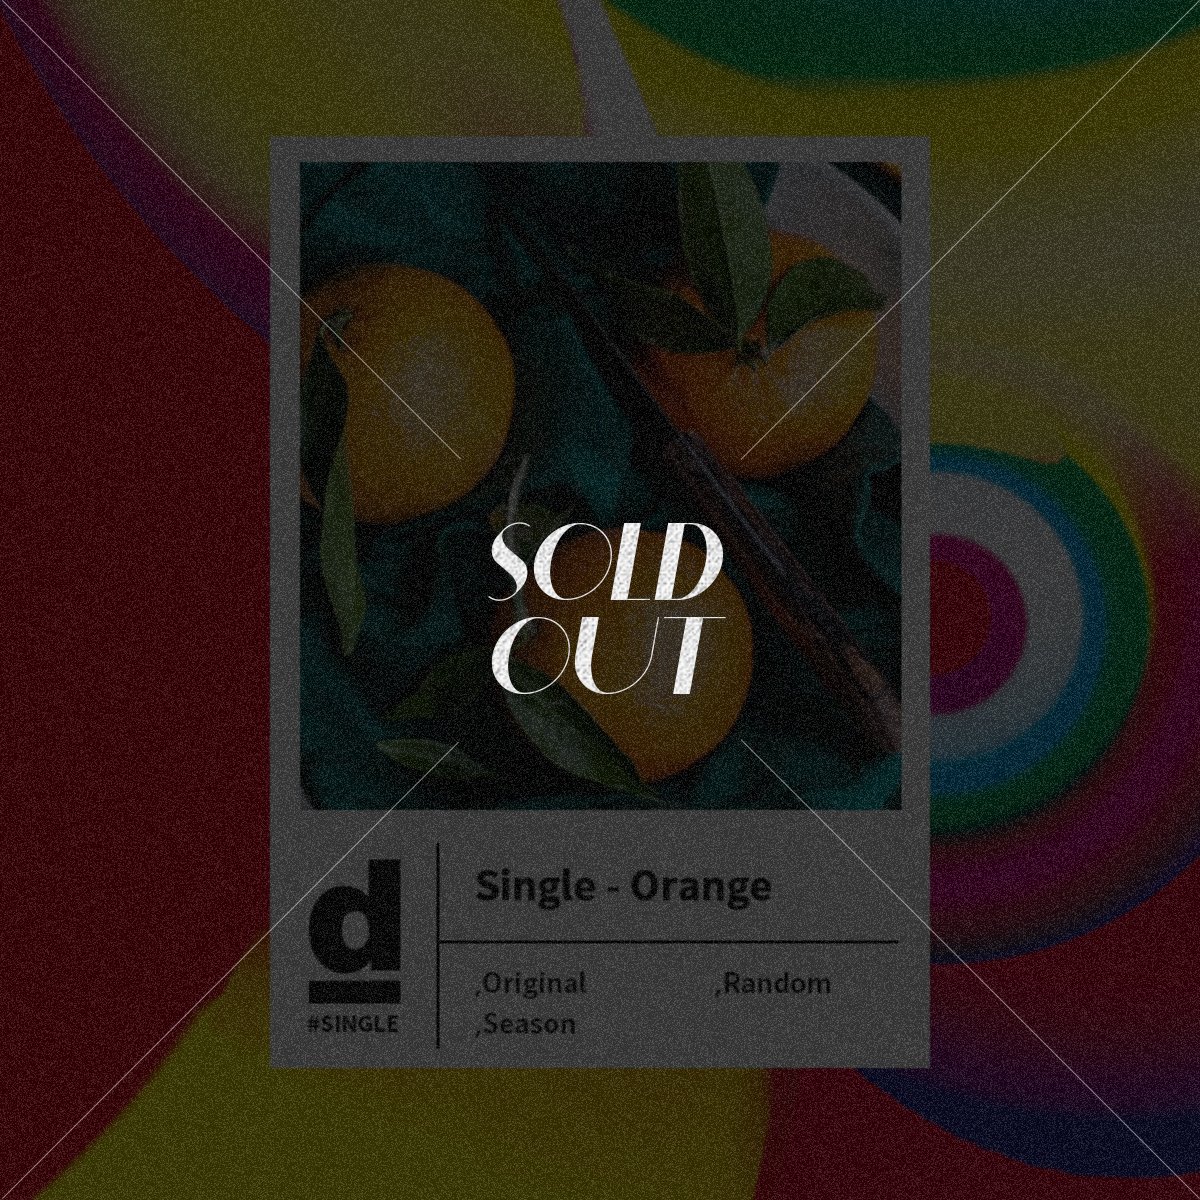 #Single Origin - Orange